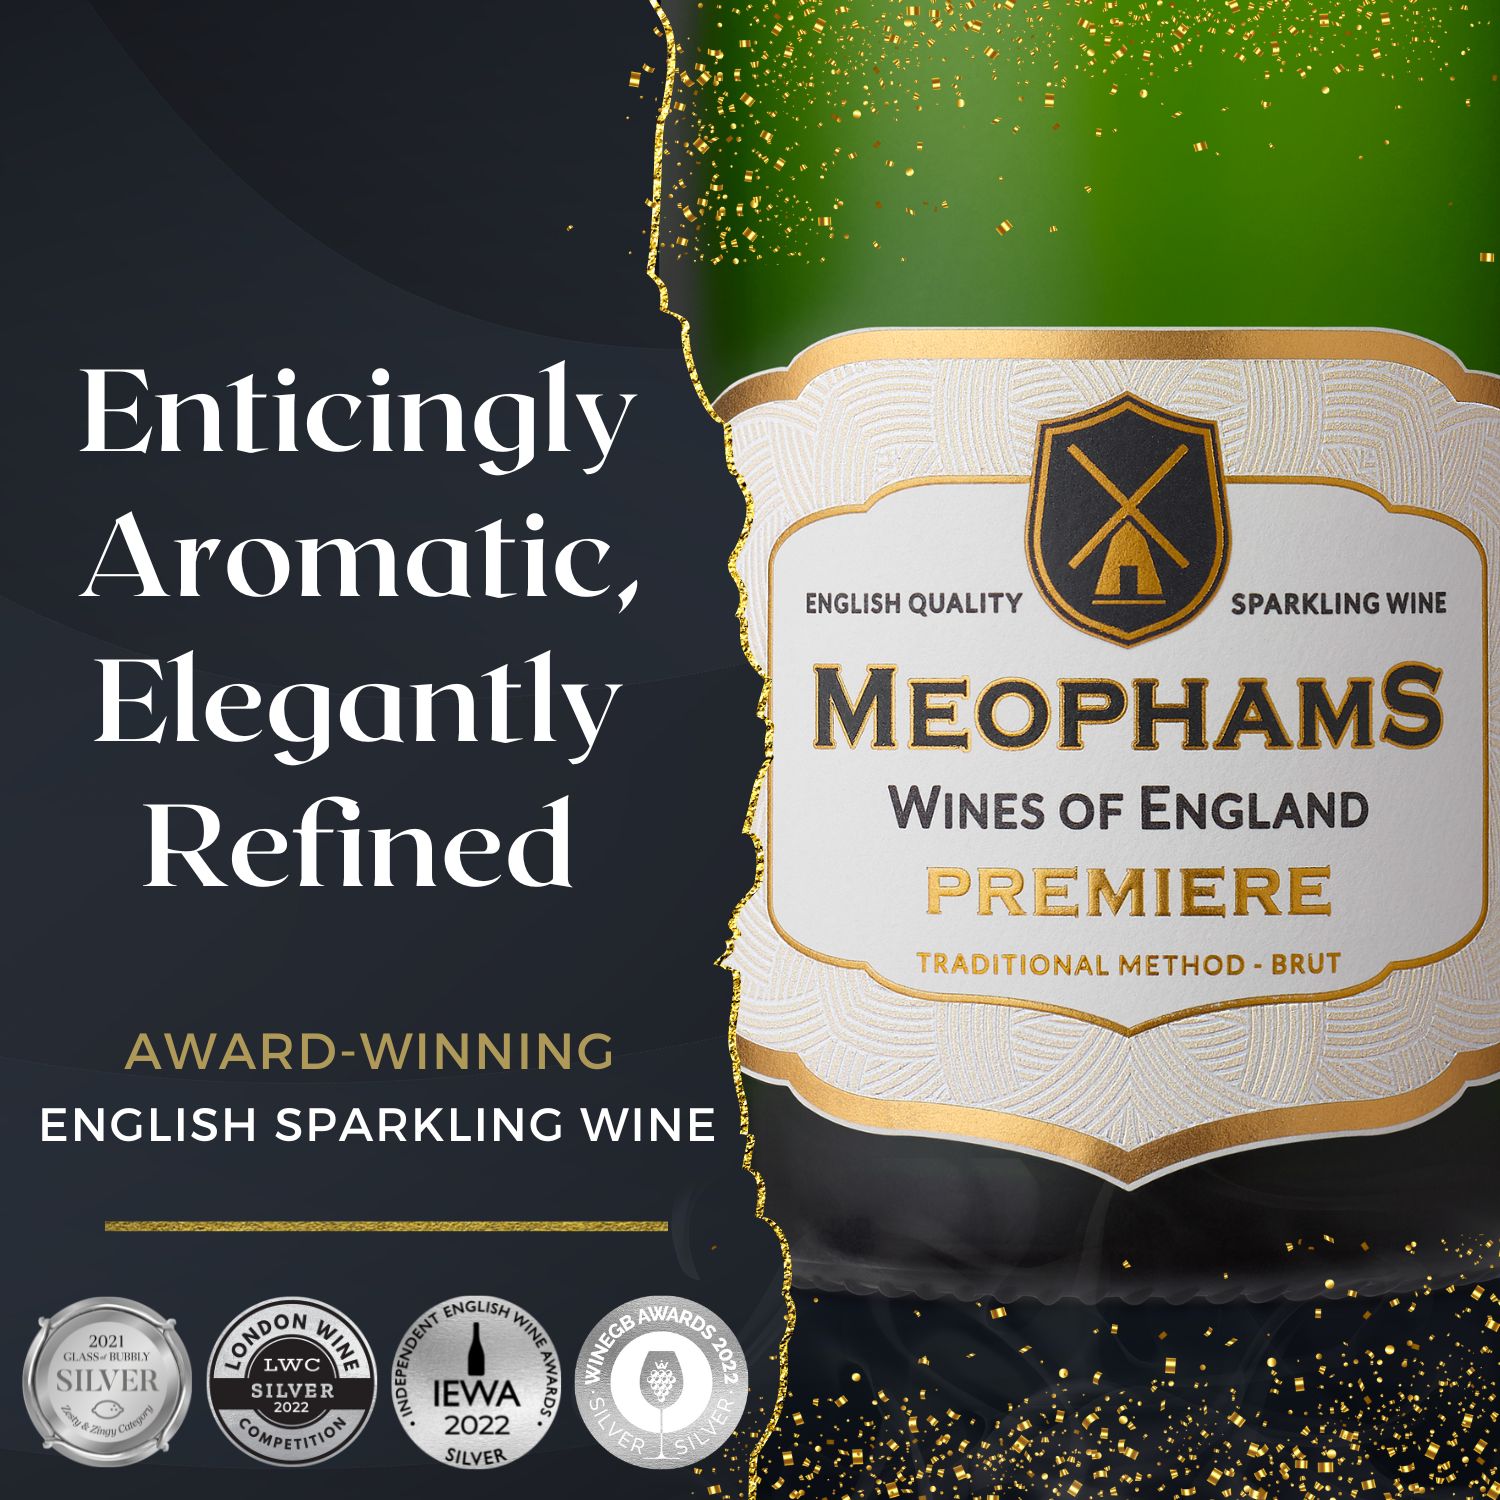 Meophams-Premiere-Brut-2019-Kent-English-Sparkling-Wine-LP-1